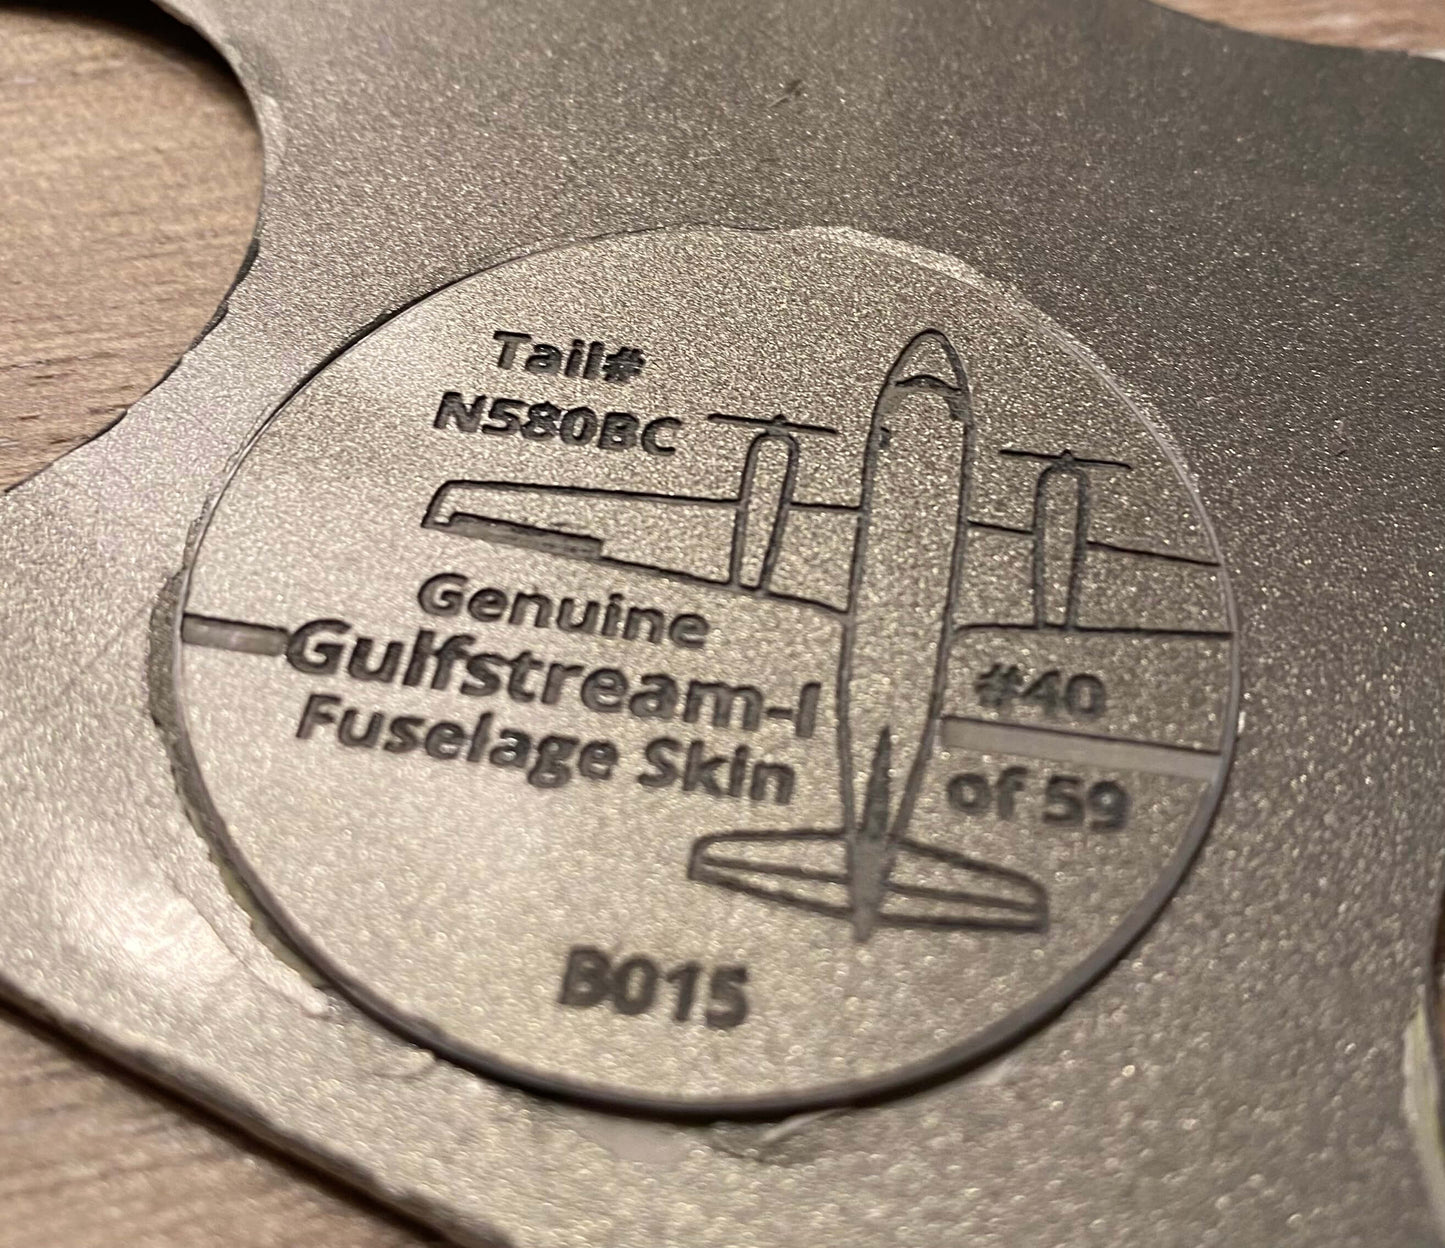 Gulfstream I (G-159) Tail # N580BC Fuselage Skin Challenge Coin - B015